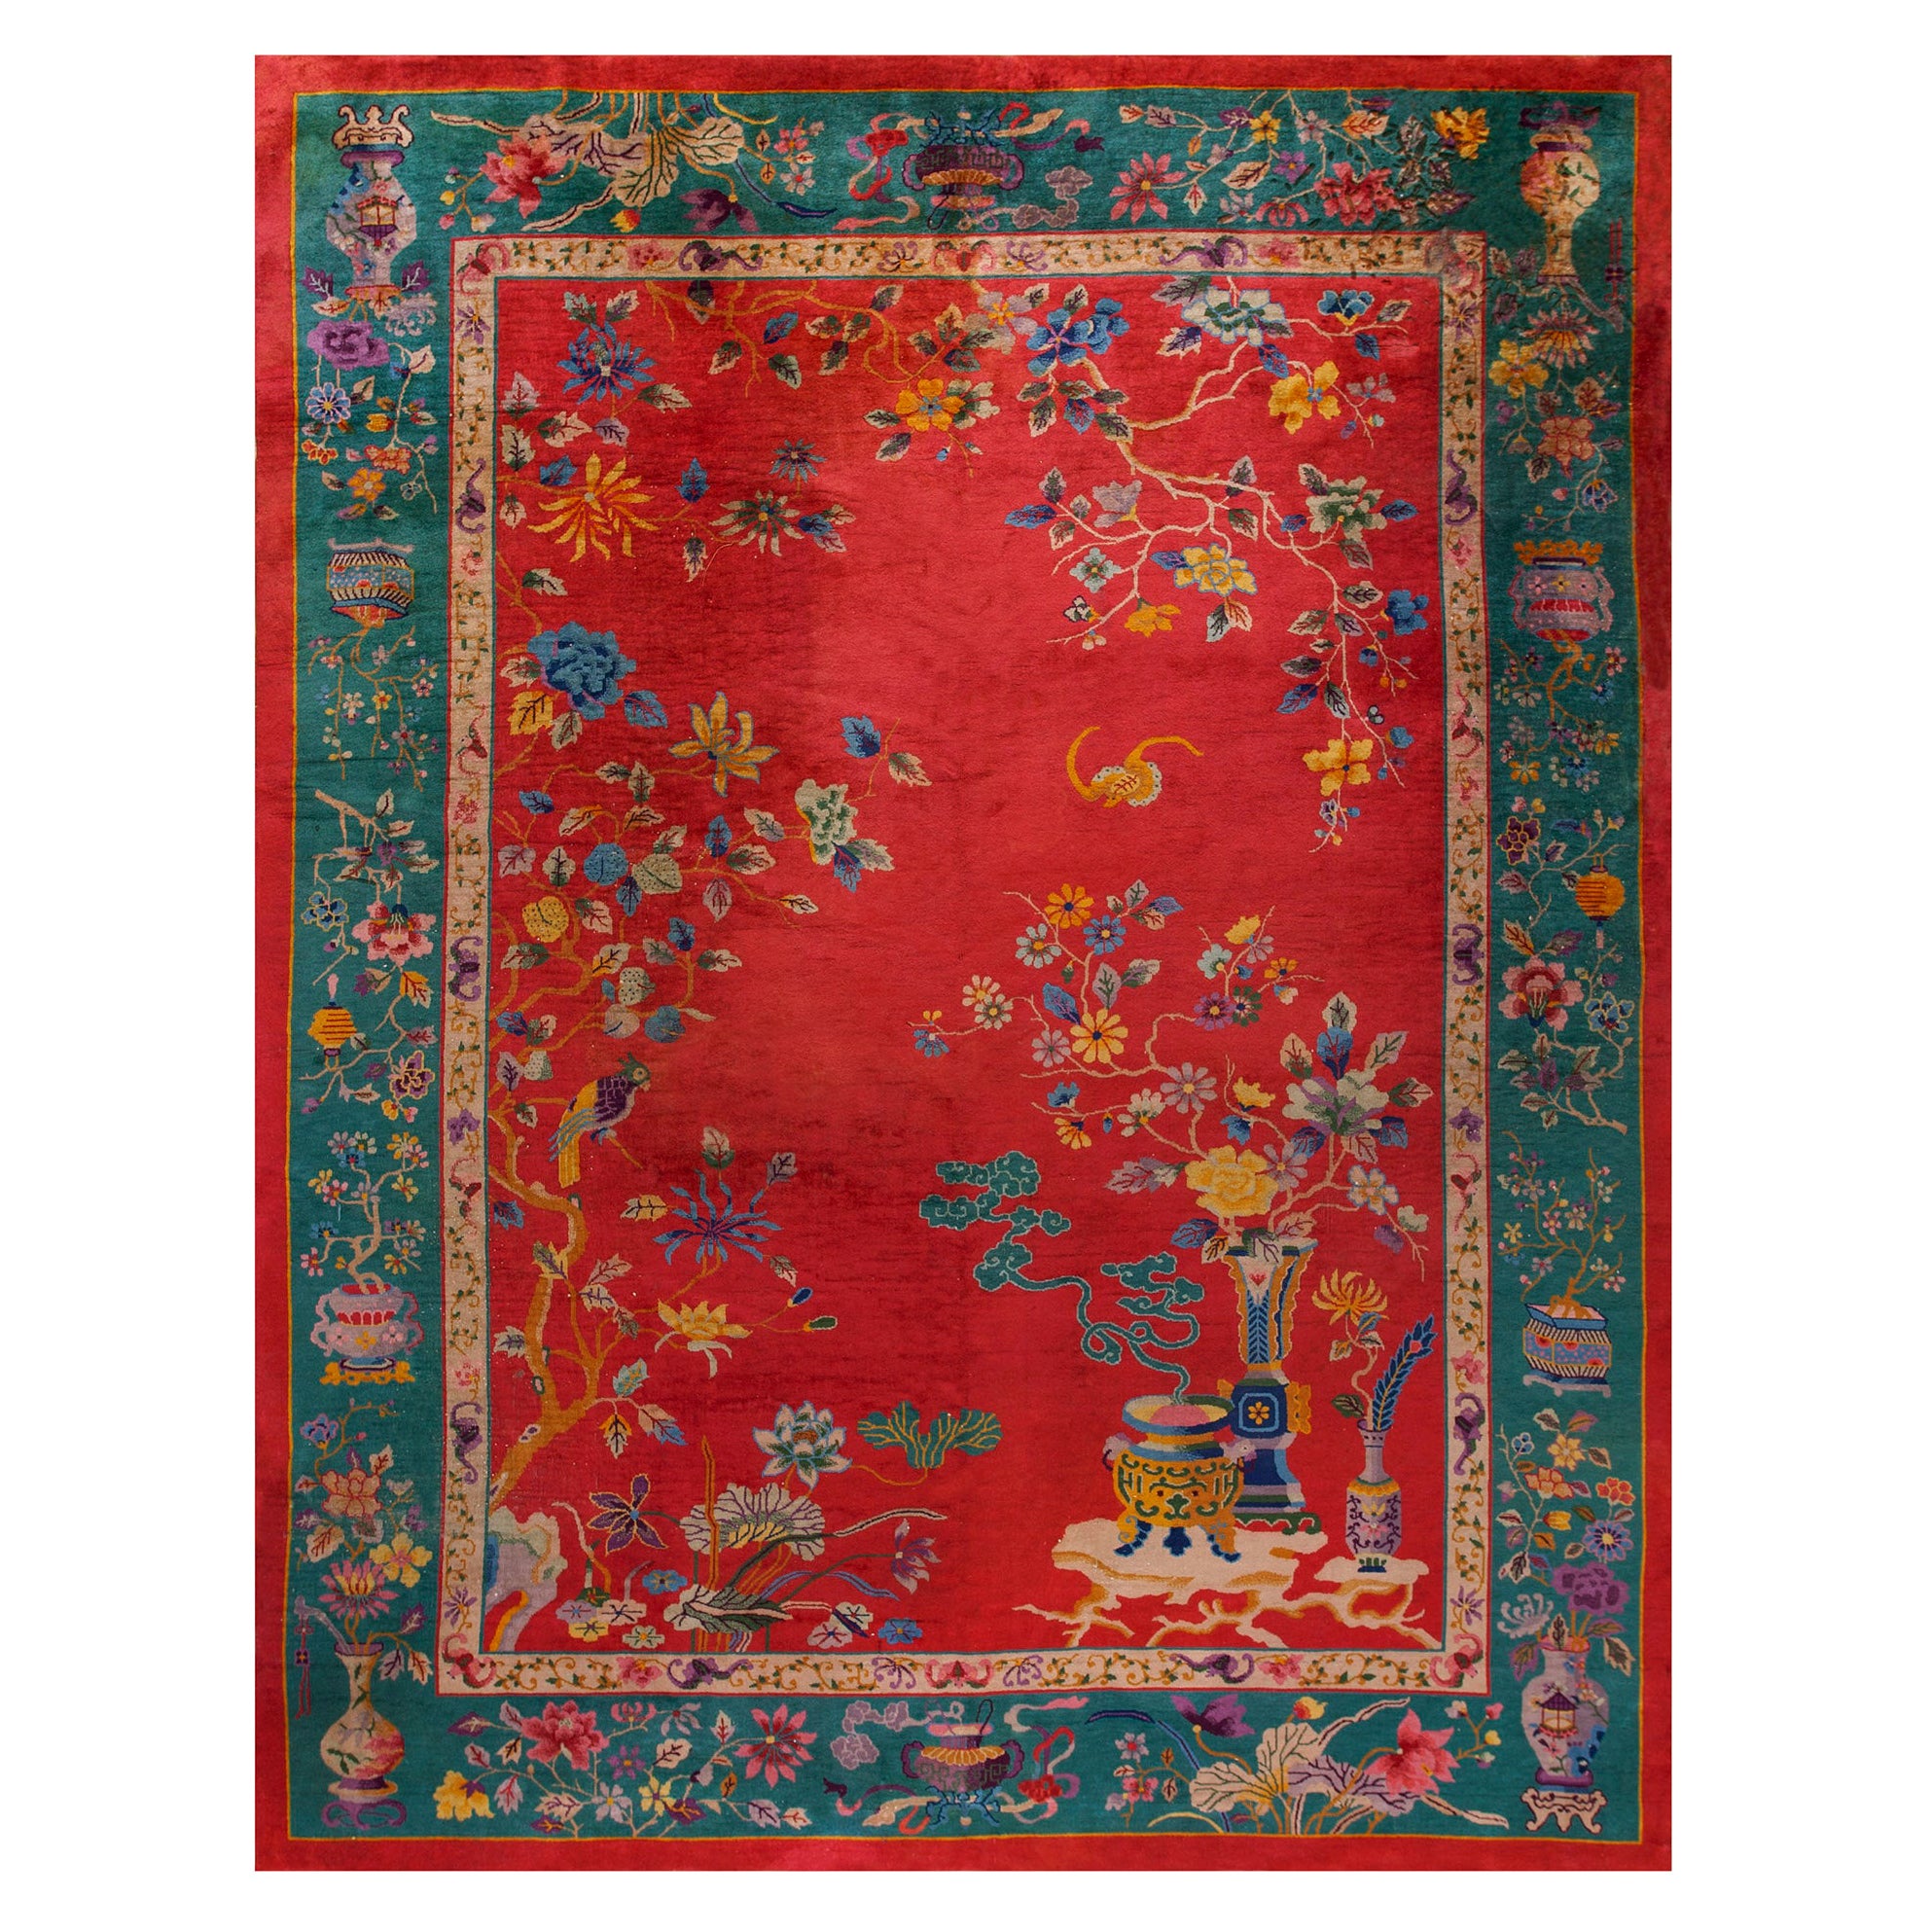 1920s Chinese Art Deco Carpet ( 9' x 11' 8'' - 275 x 355 cm )